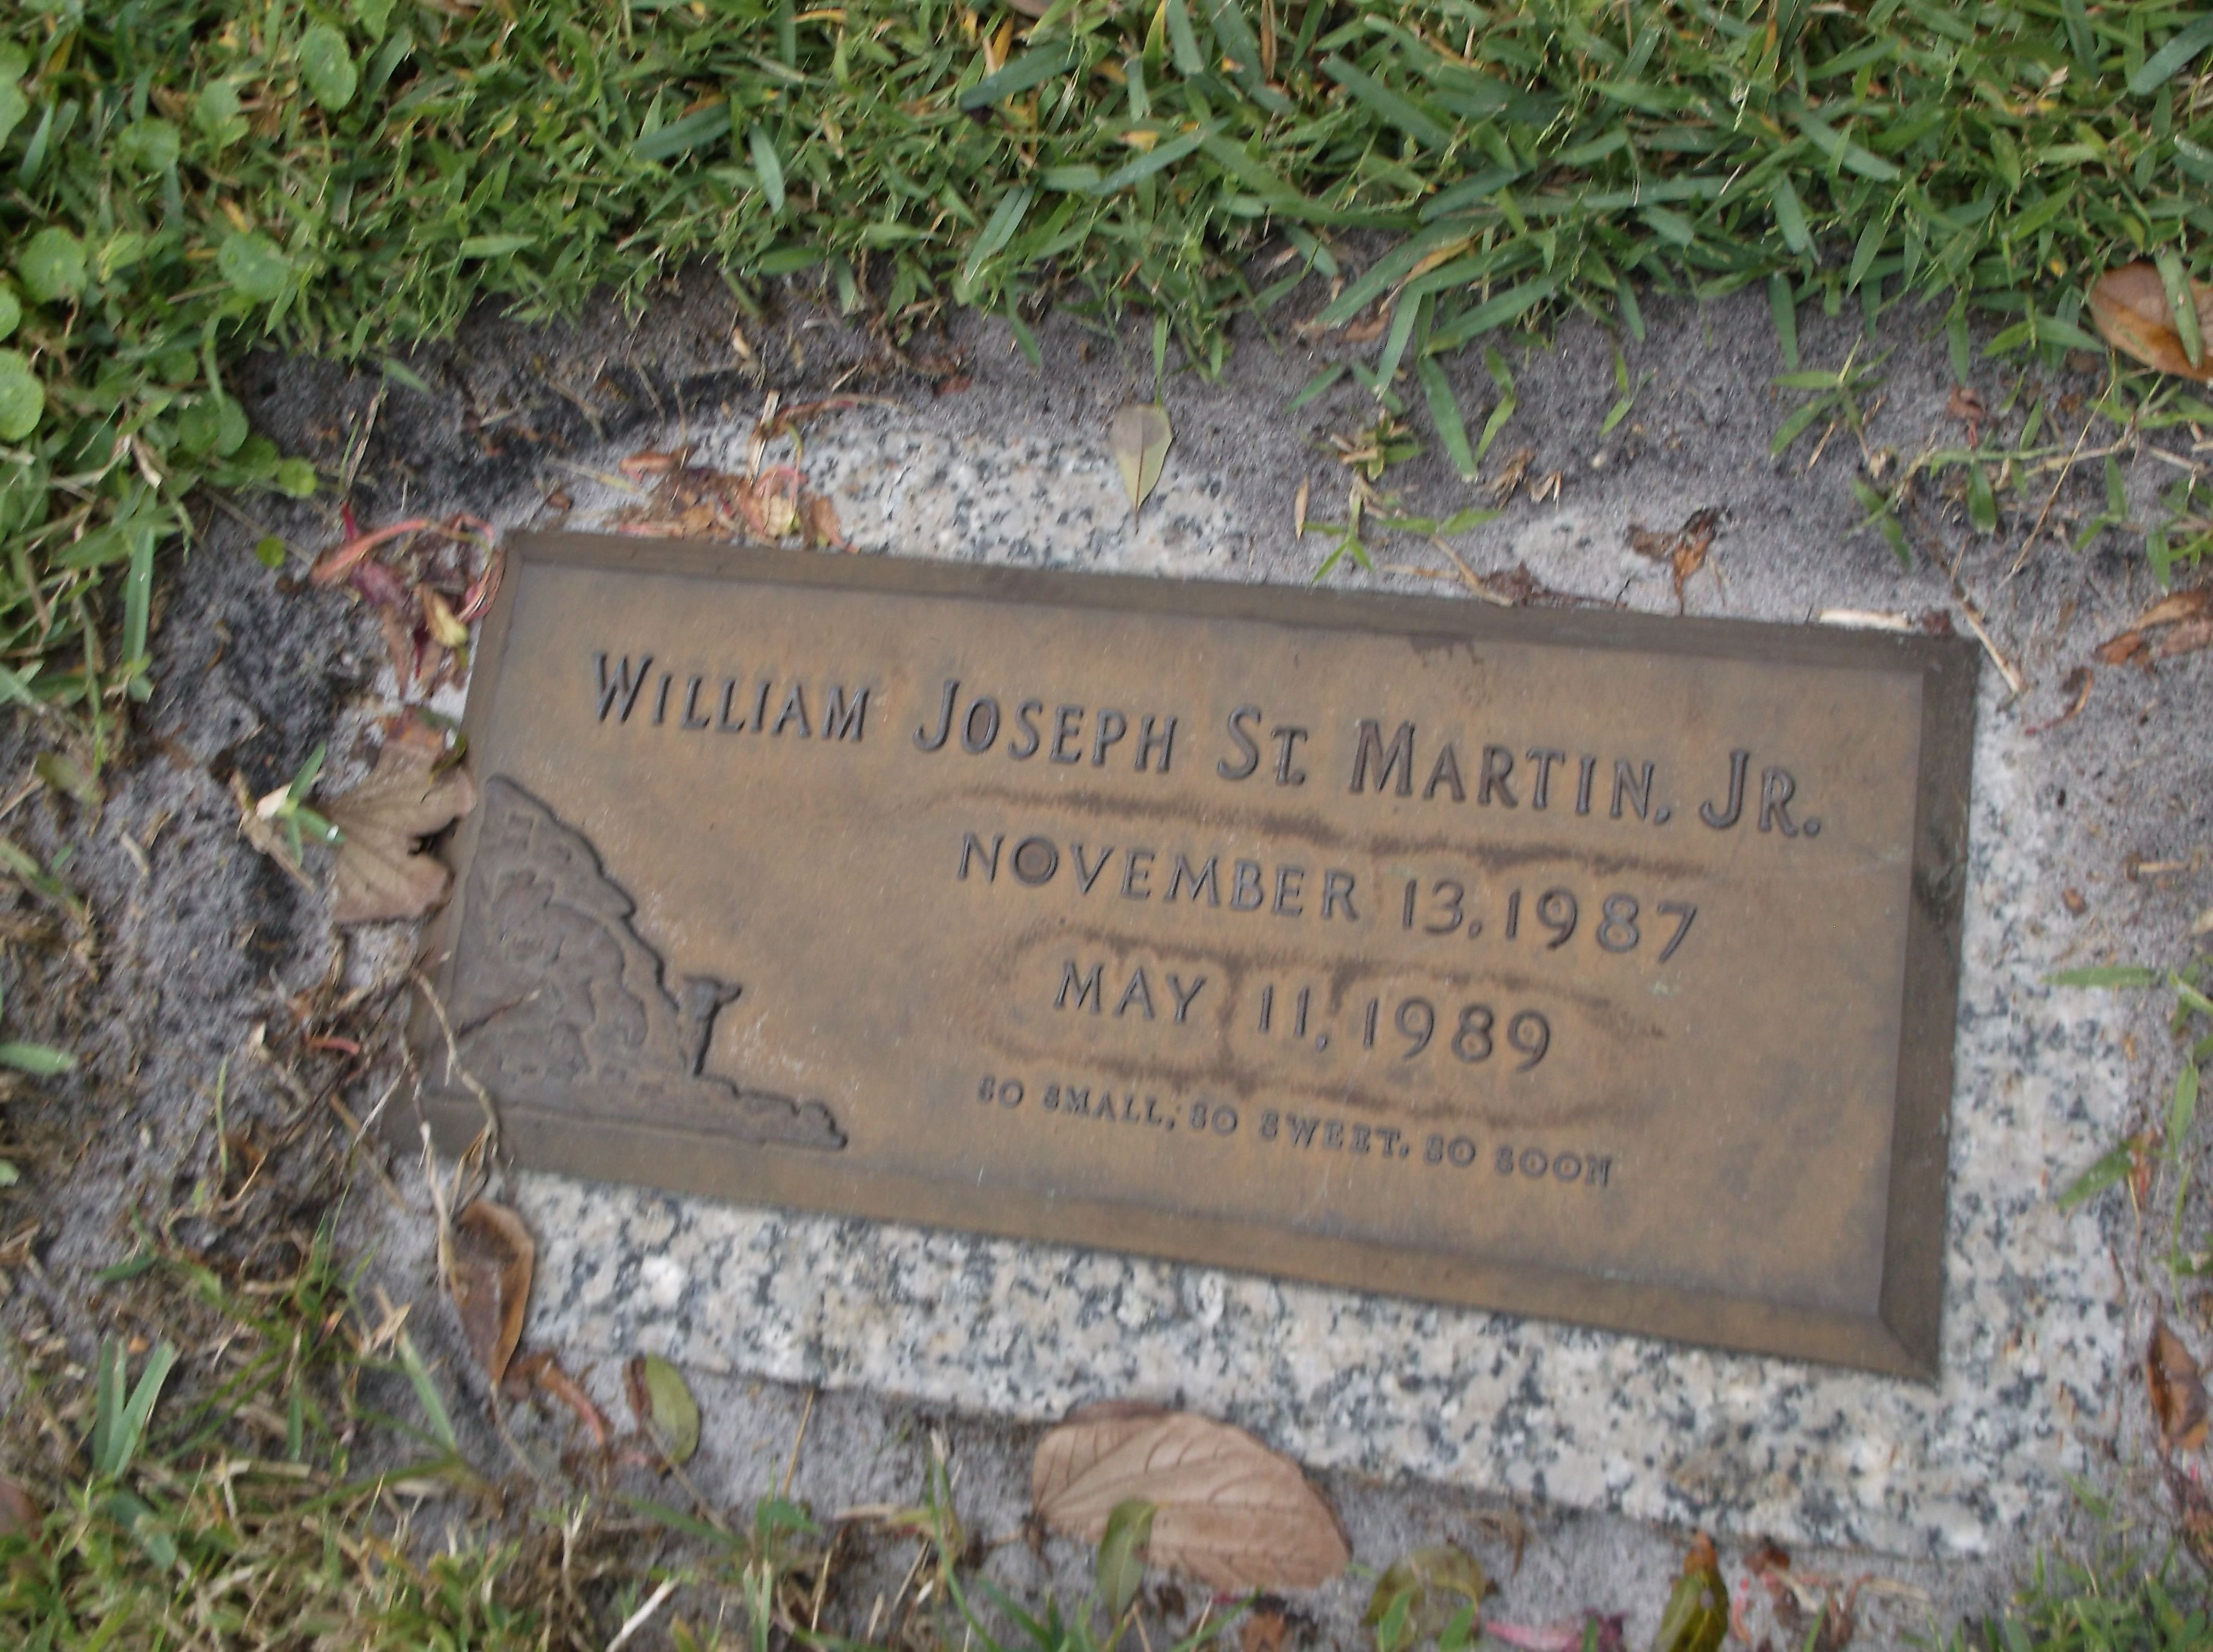 William Joseph St Martin, Jr